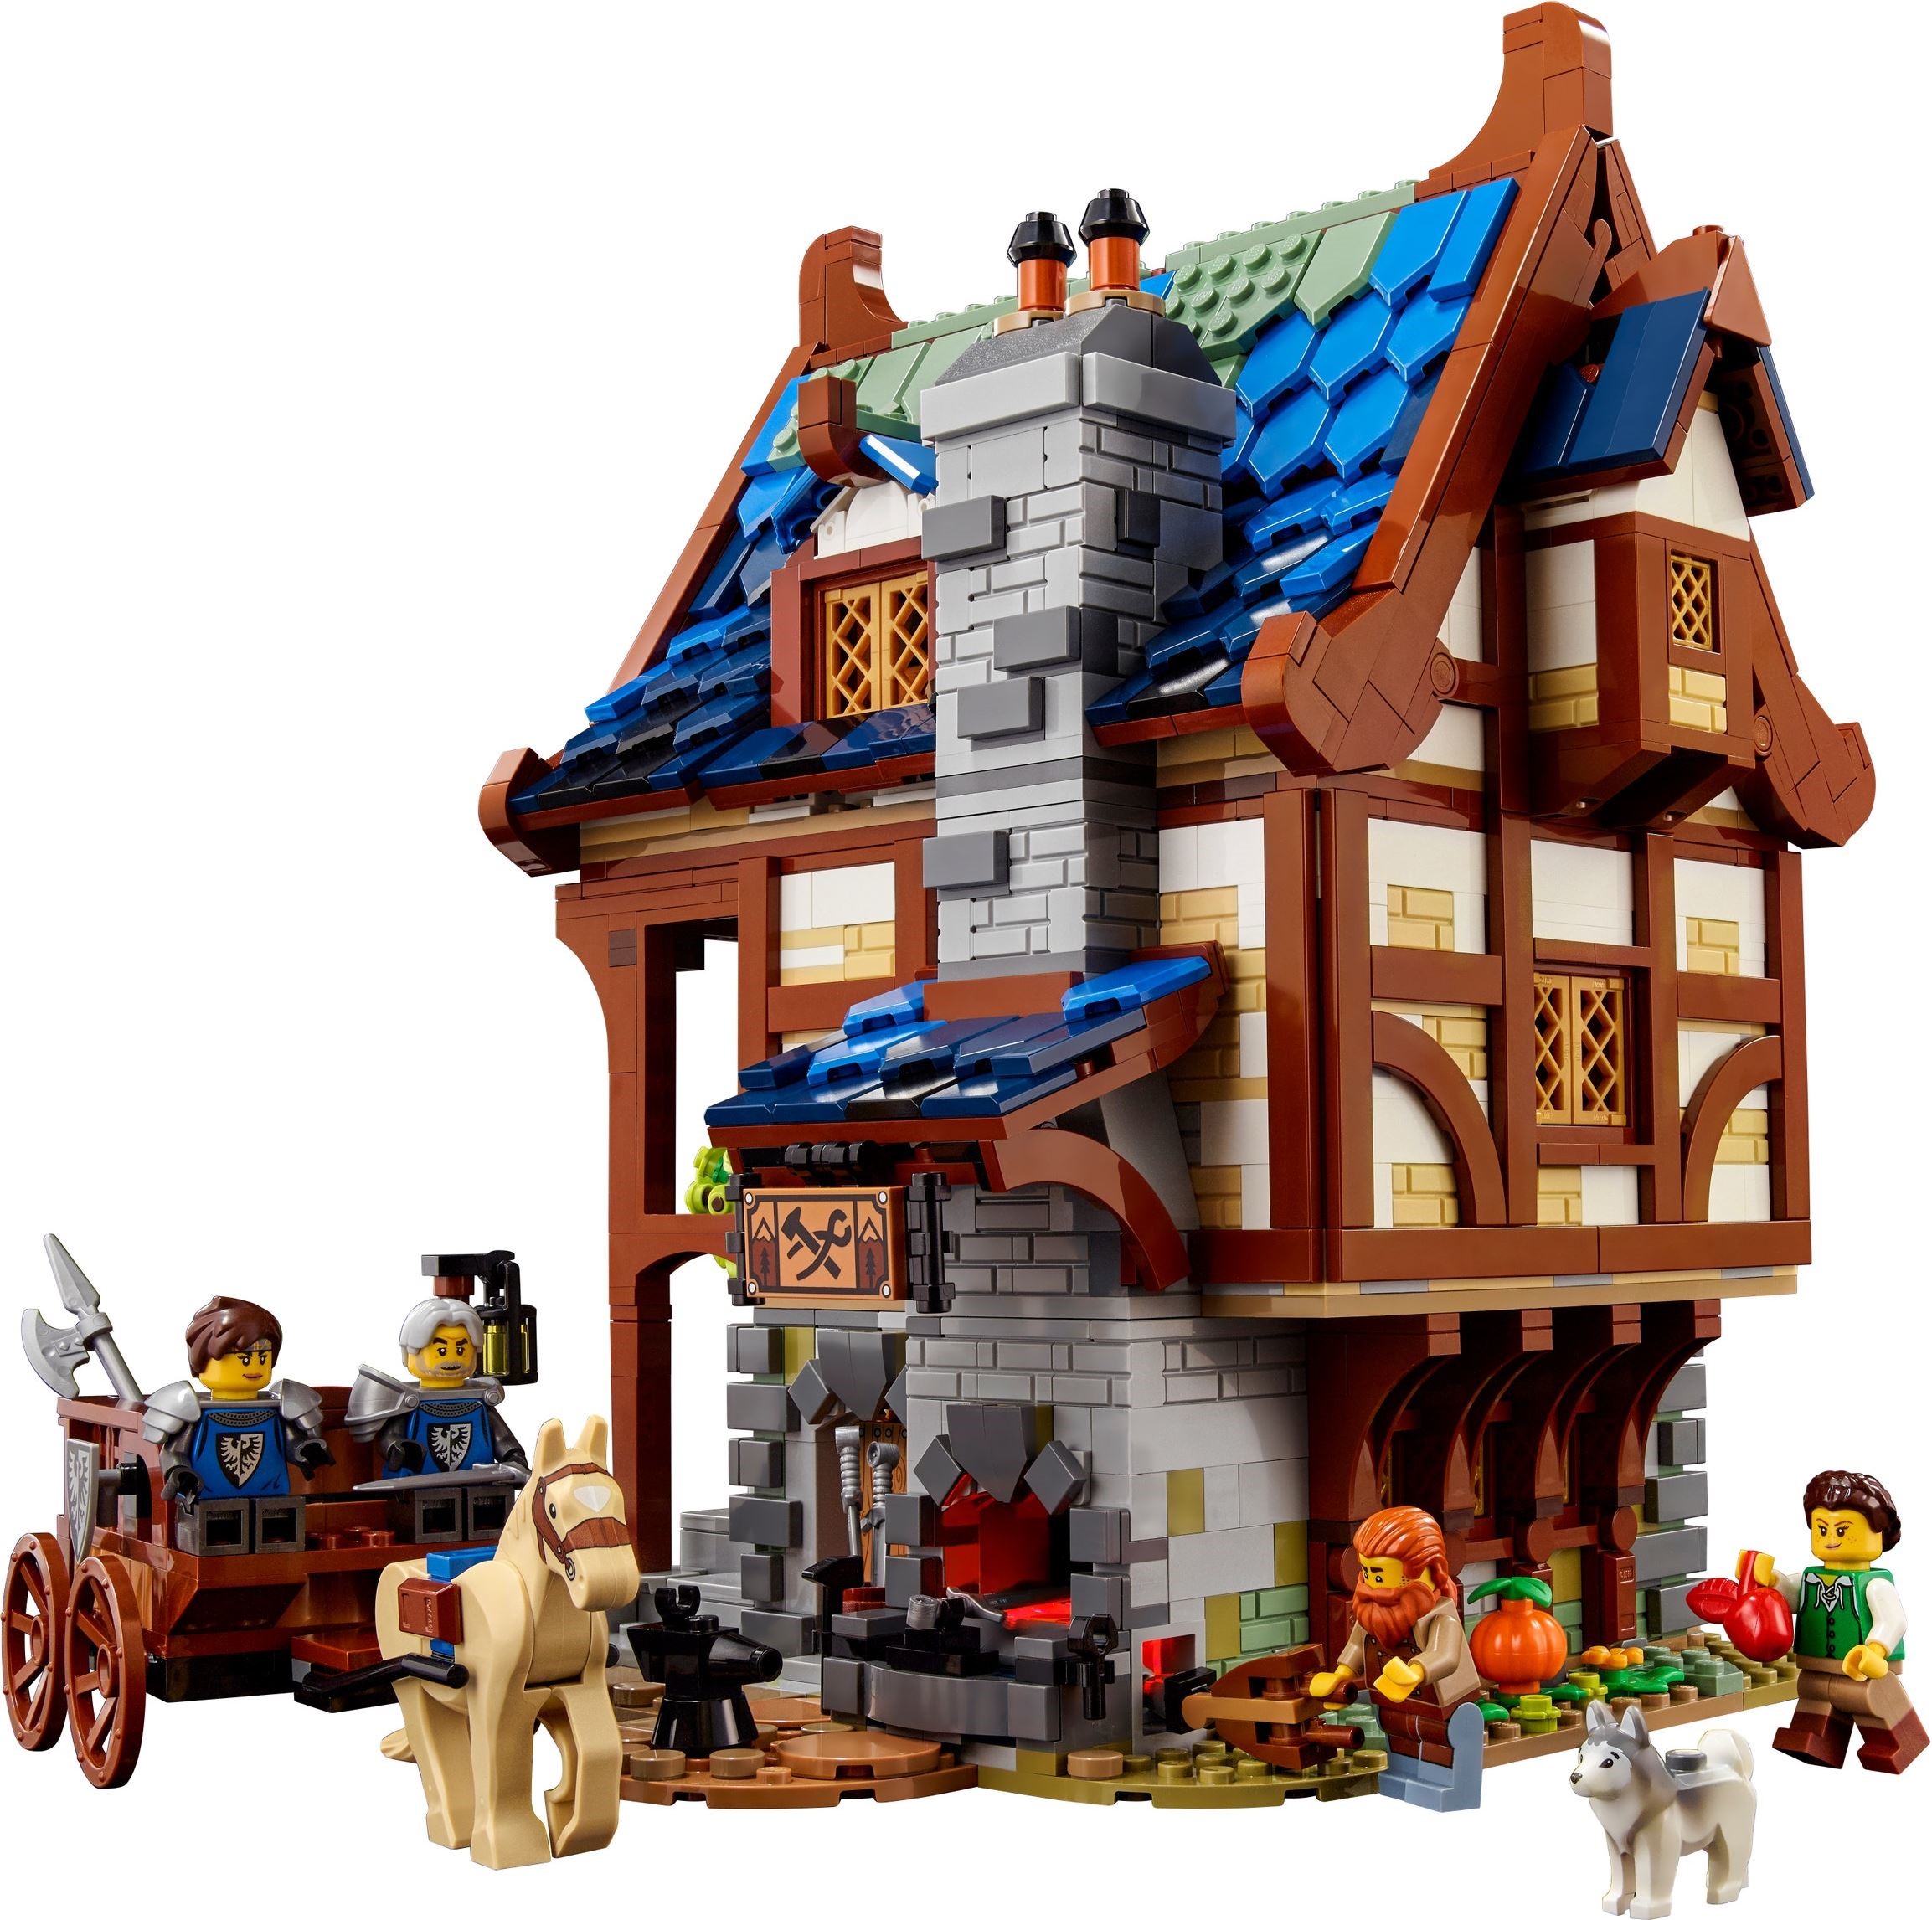 21325 LEGO Ideas Medieval Blacksmith - Đồ chơi LEGO Nhà rèn thời trung cổ.